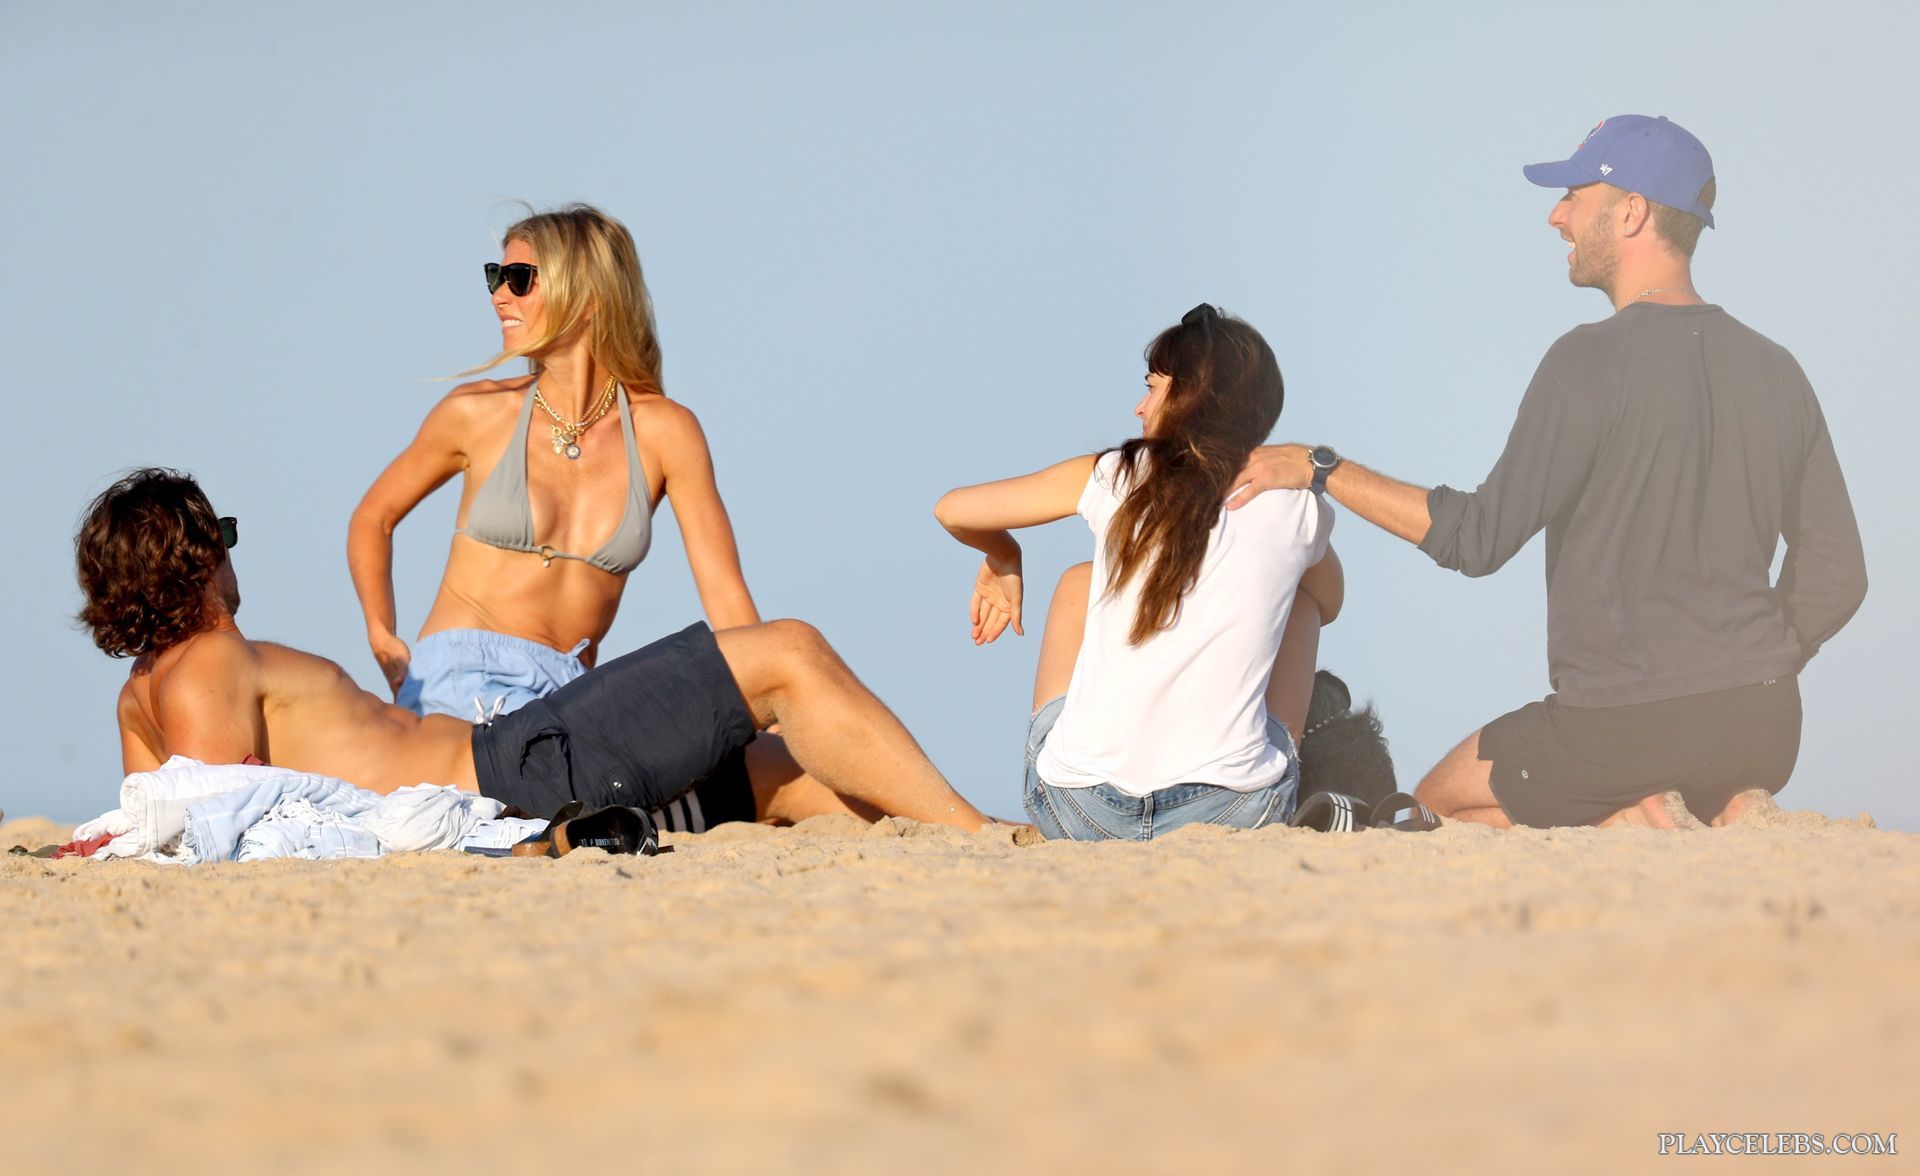 You are currently viewing Gwyneth Paltrow & Dakota Johnson Caught Sunbathing In Bikini On A Beach